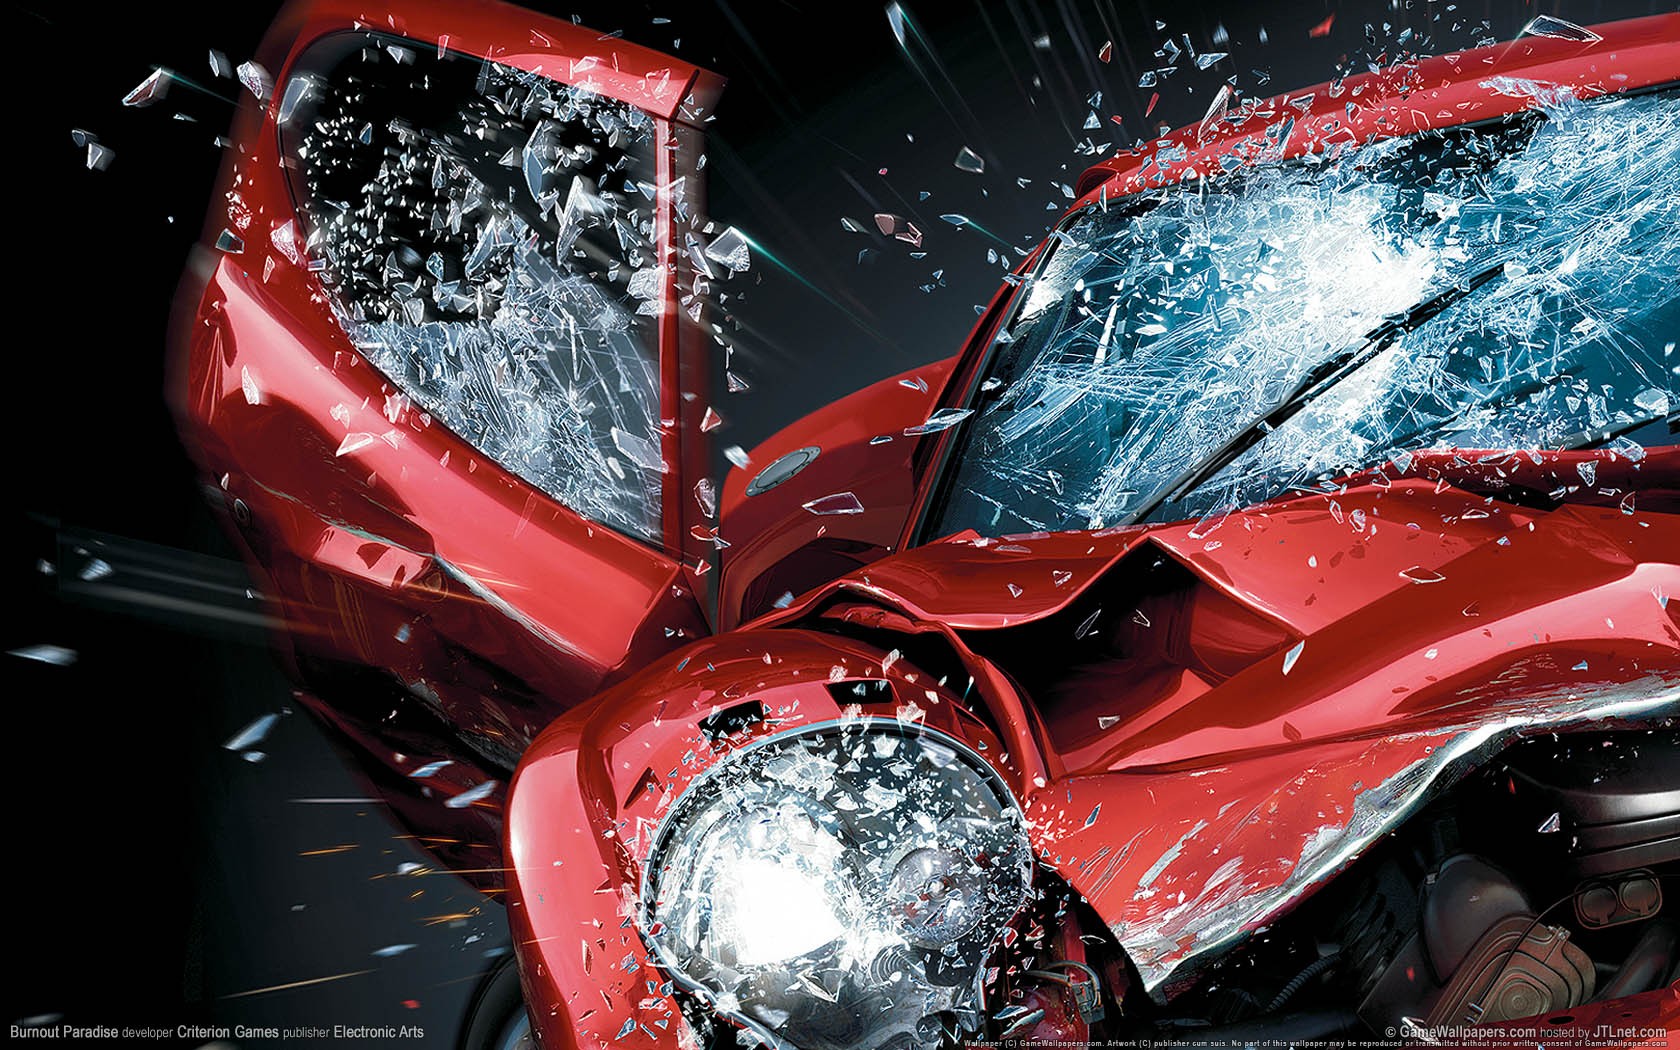 General 1680x1050 Burnout Paradise video games car vehicle broken glass video game art Criterion Games Electronic Arts EA Games crash